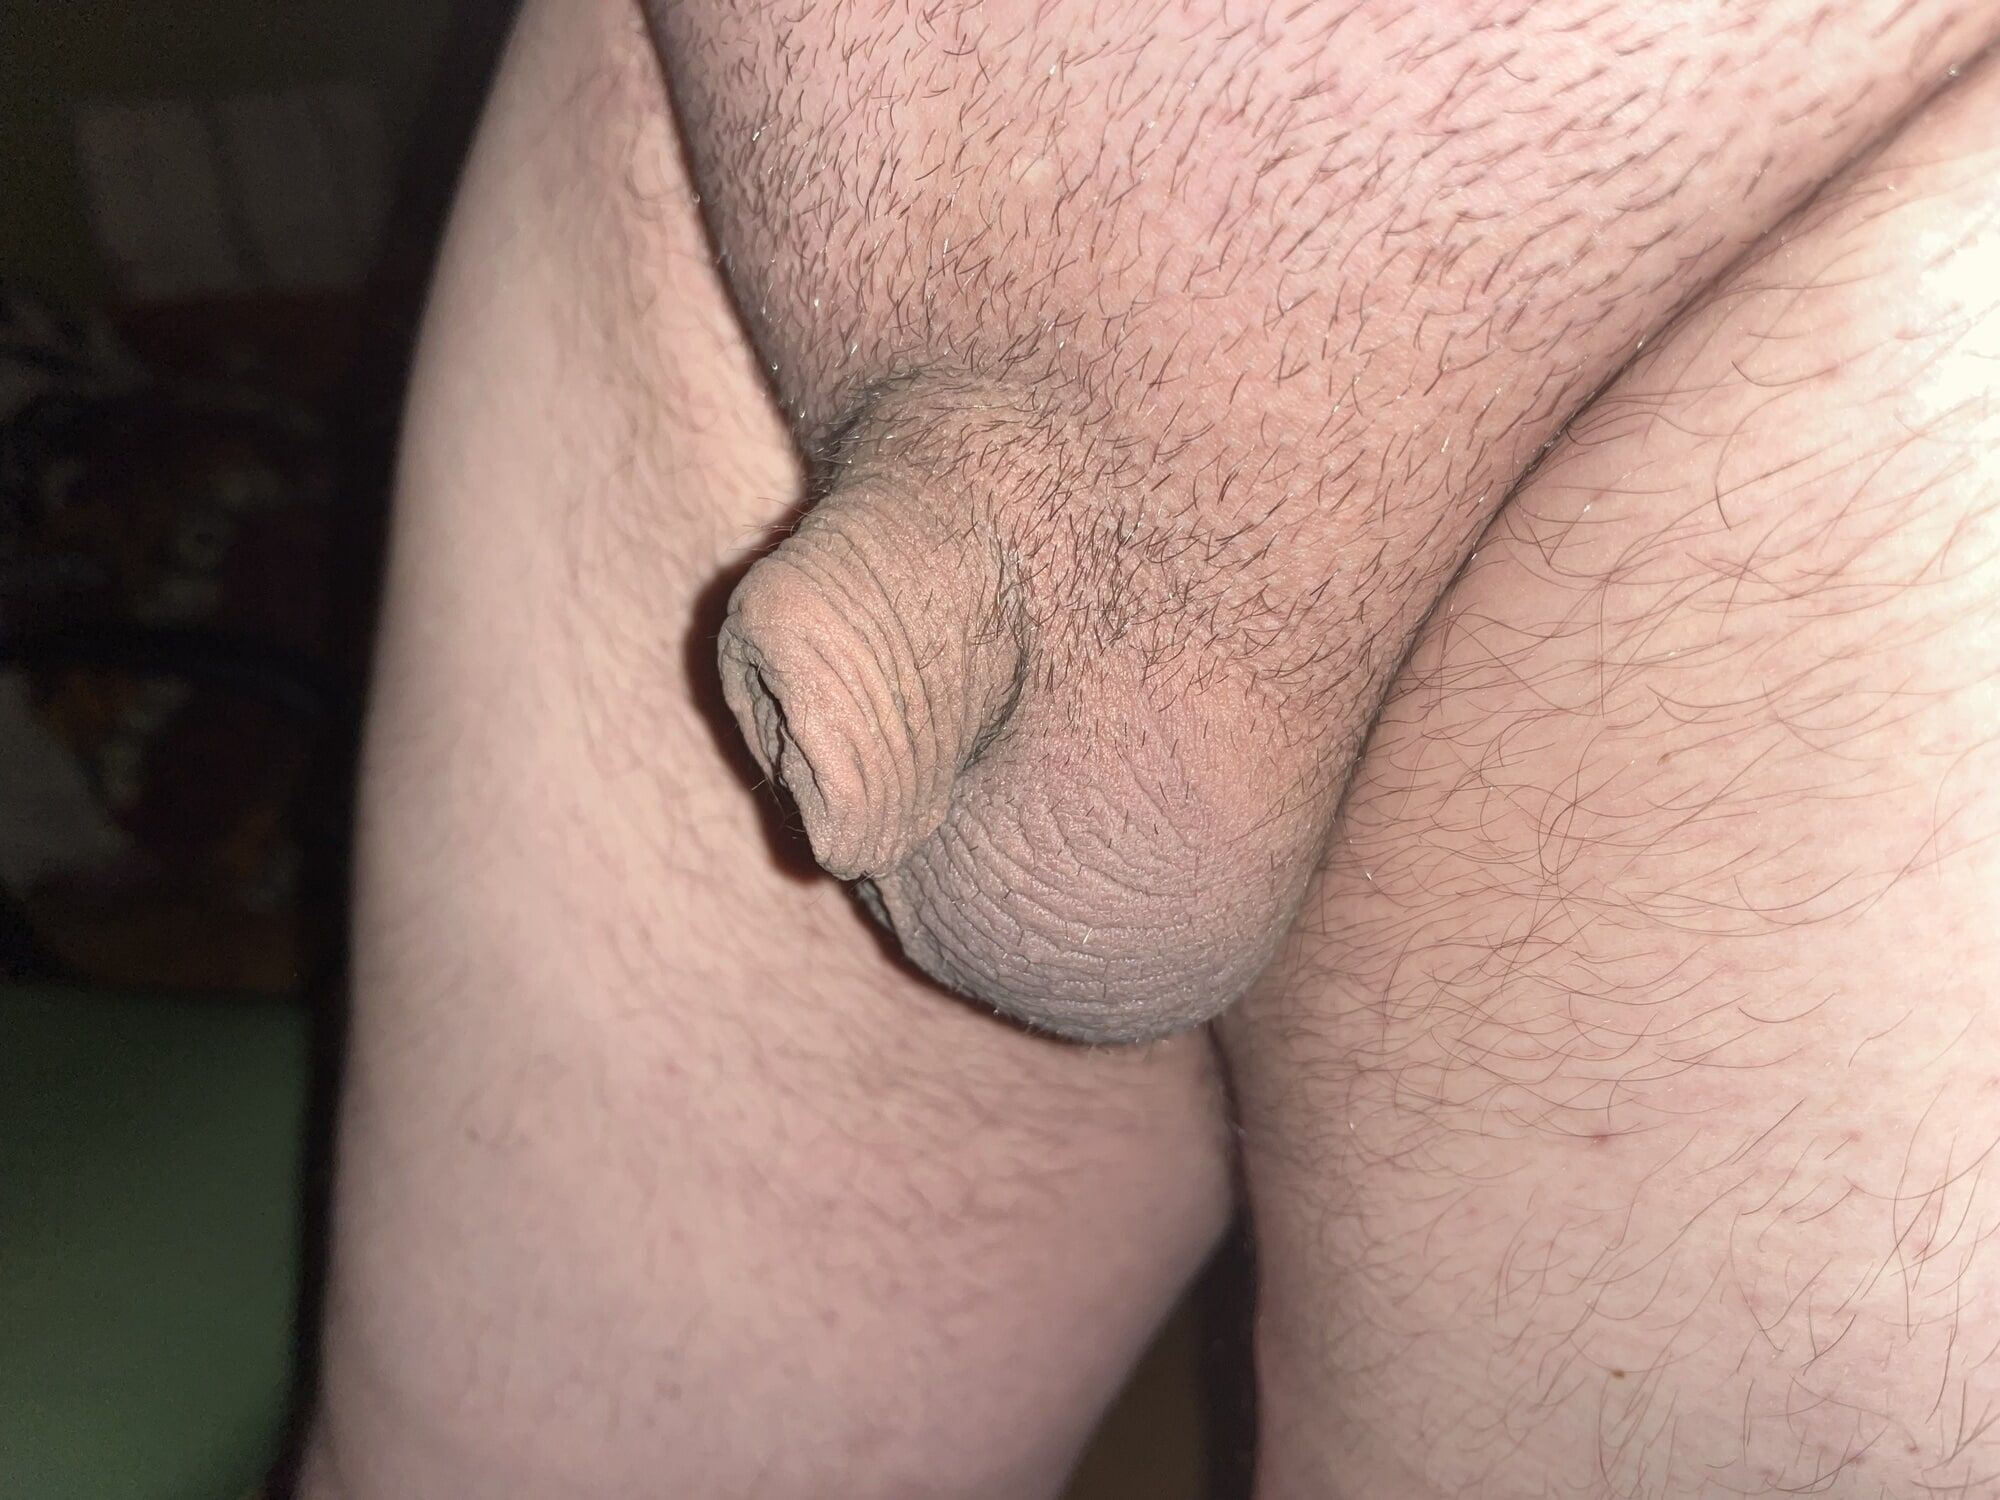 My limp tiny dick #4